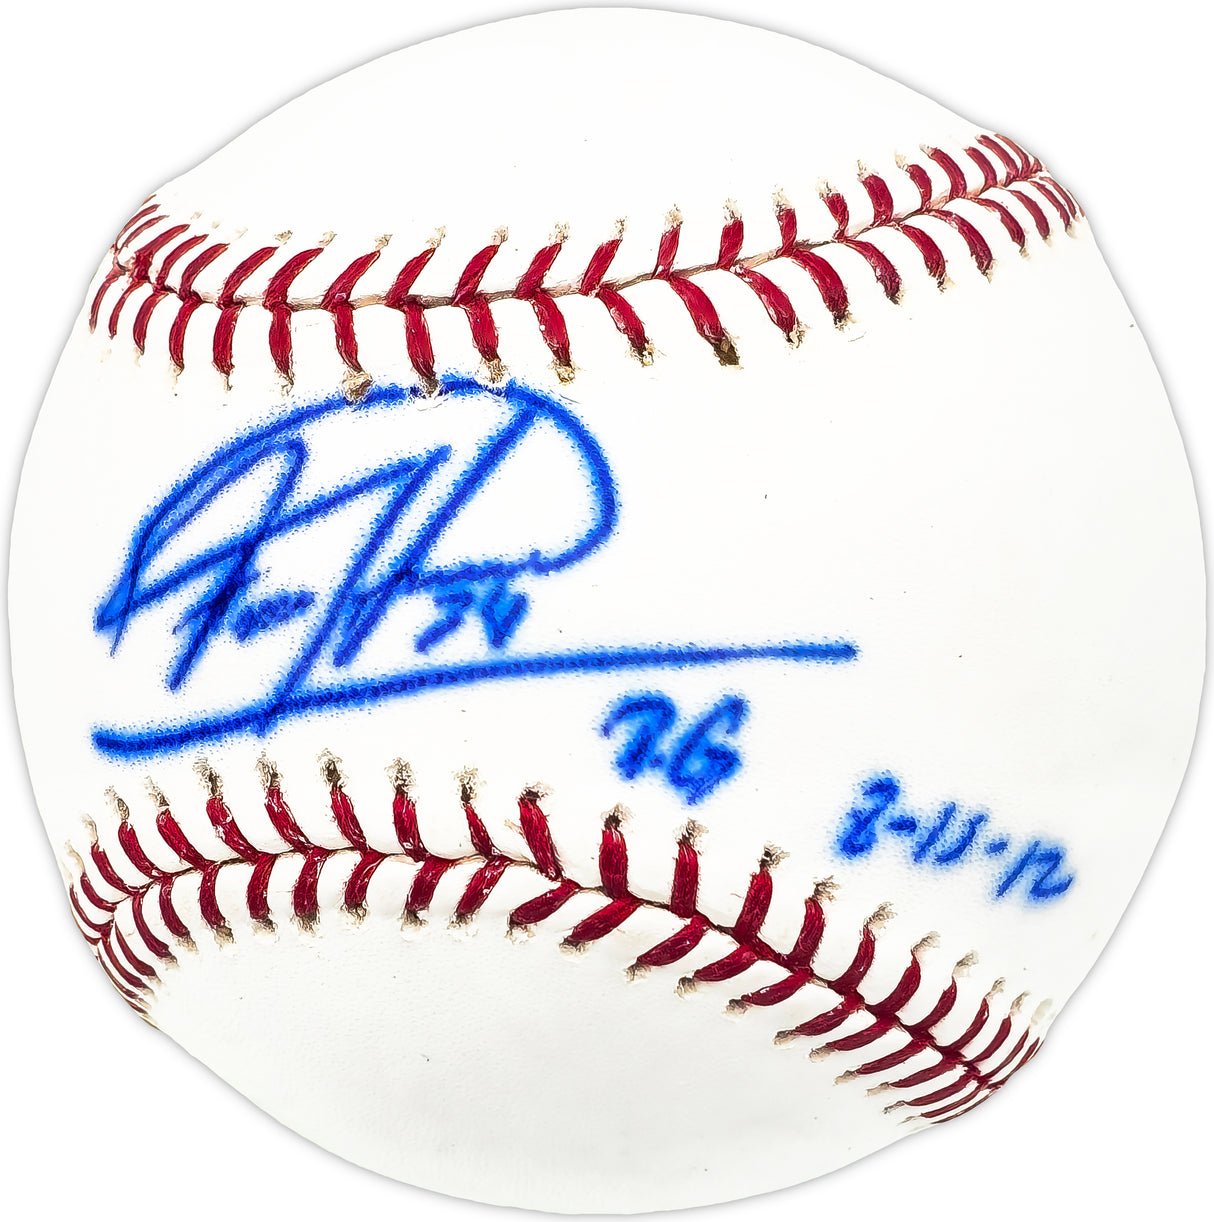 Felix Hernandez Autographed Official MLB Baseball Seattle Mariners "PG 8-15-12" PSA/DNA #4A52883